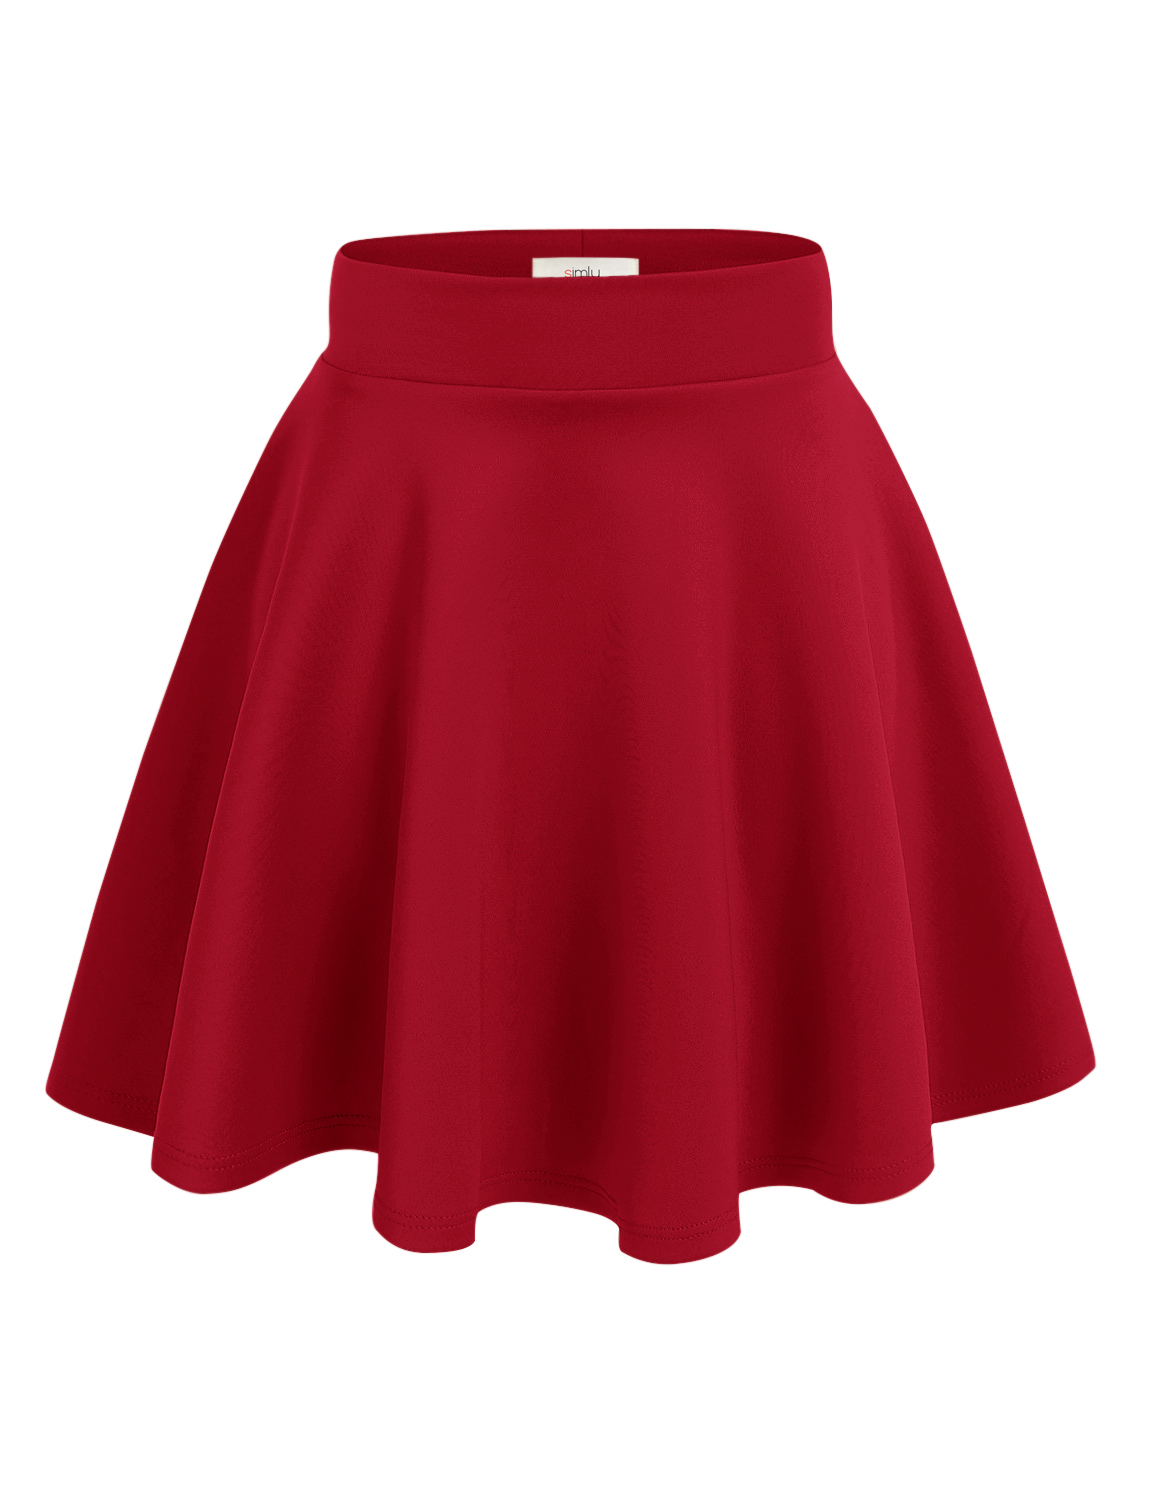 Simlu - Simlu Womens Red Skater Skirt, A Line Flared Skirt Reg